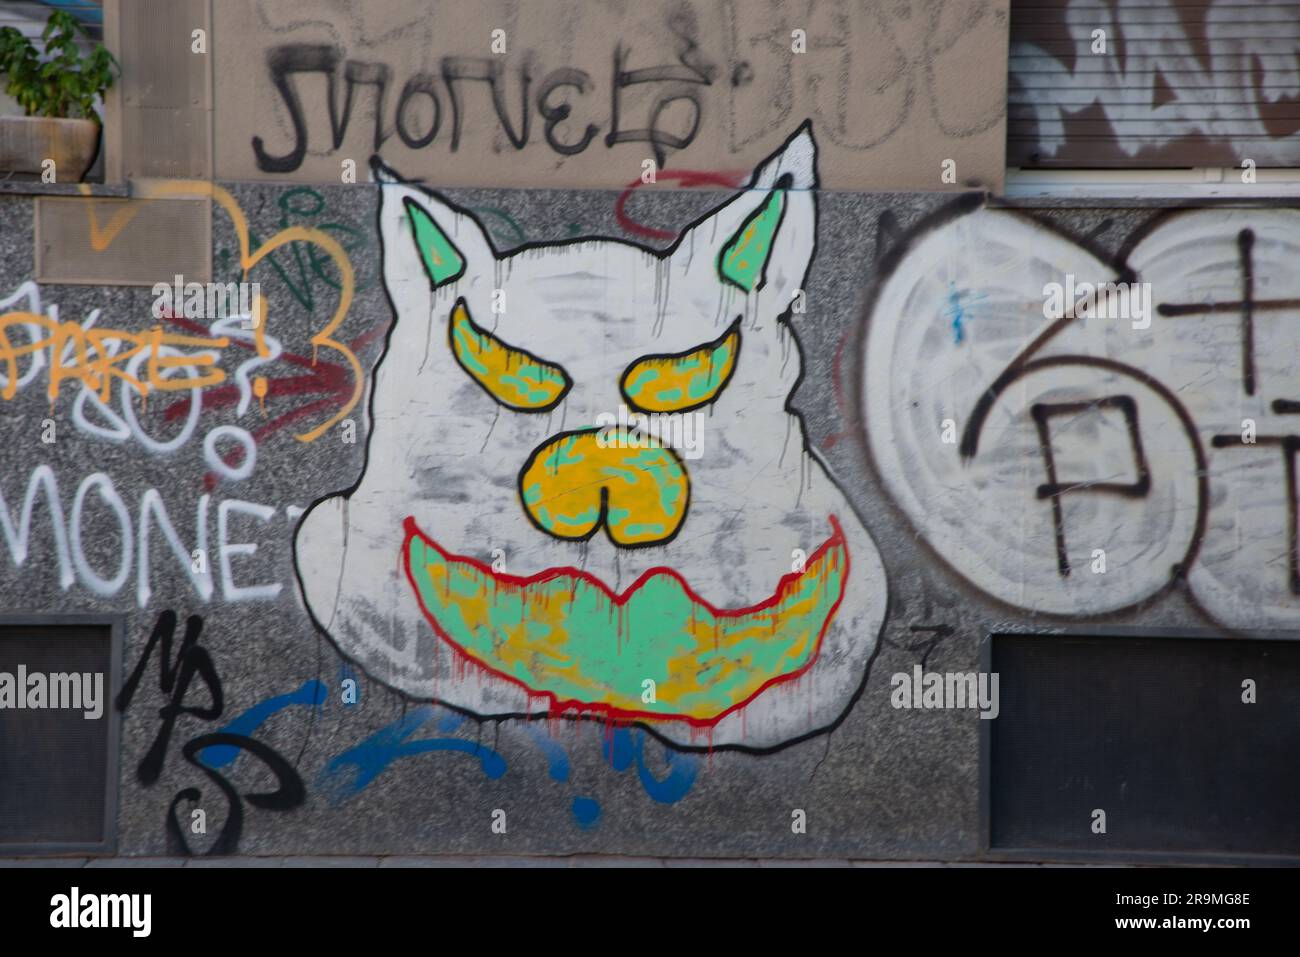 Milan graffiti Street art Stock Photo